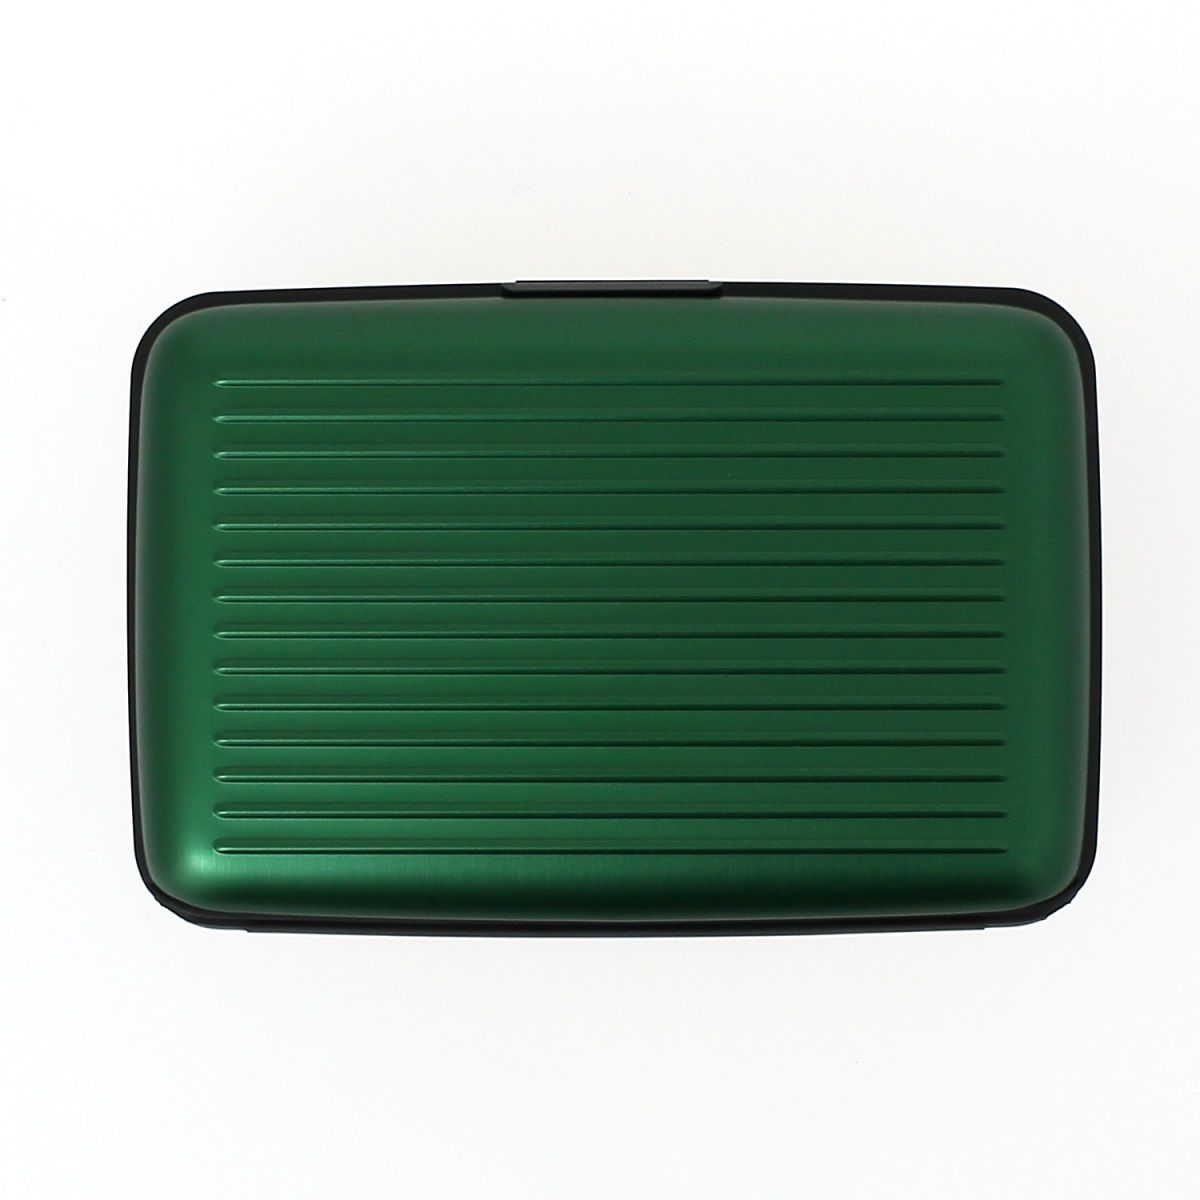 OGON Aluminum Wallet - Green